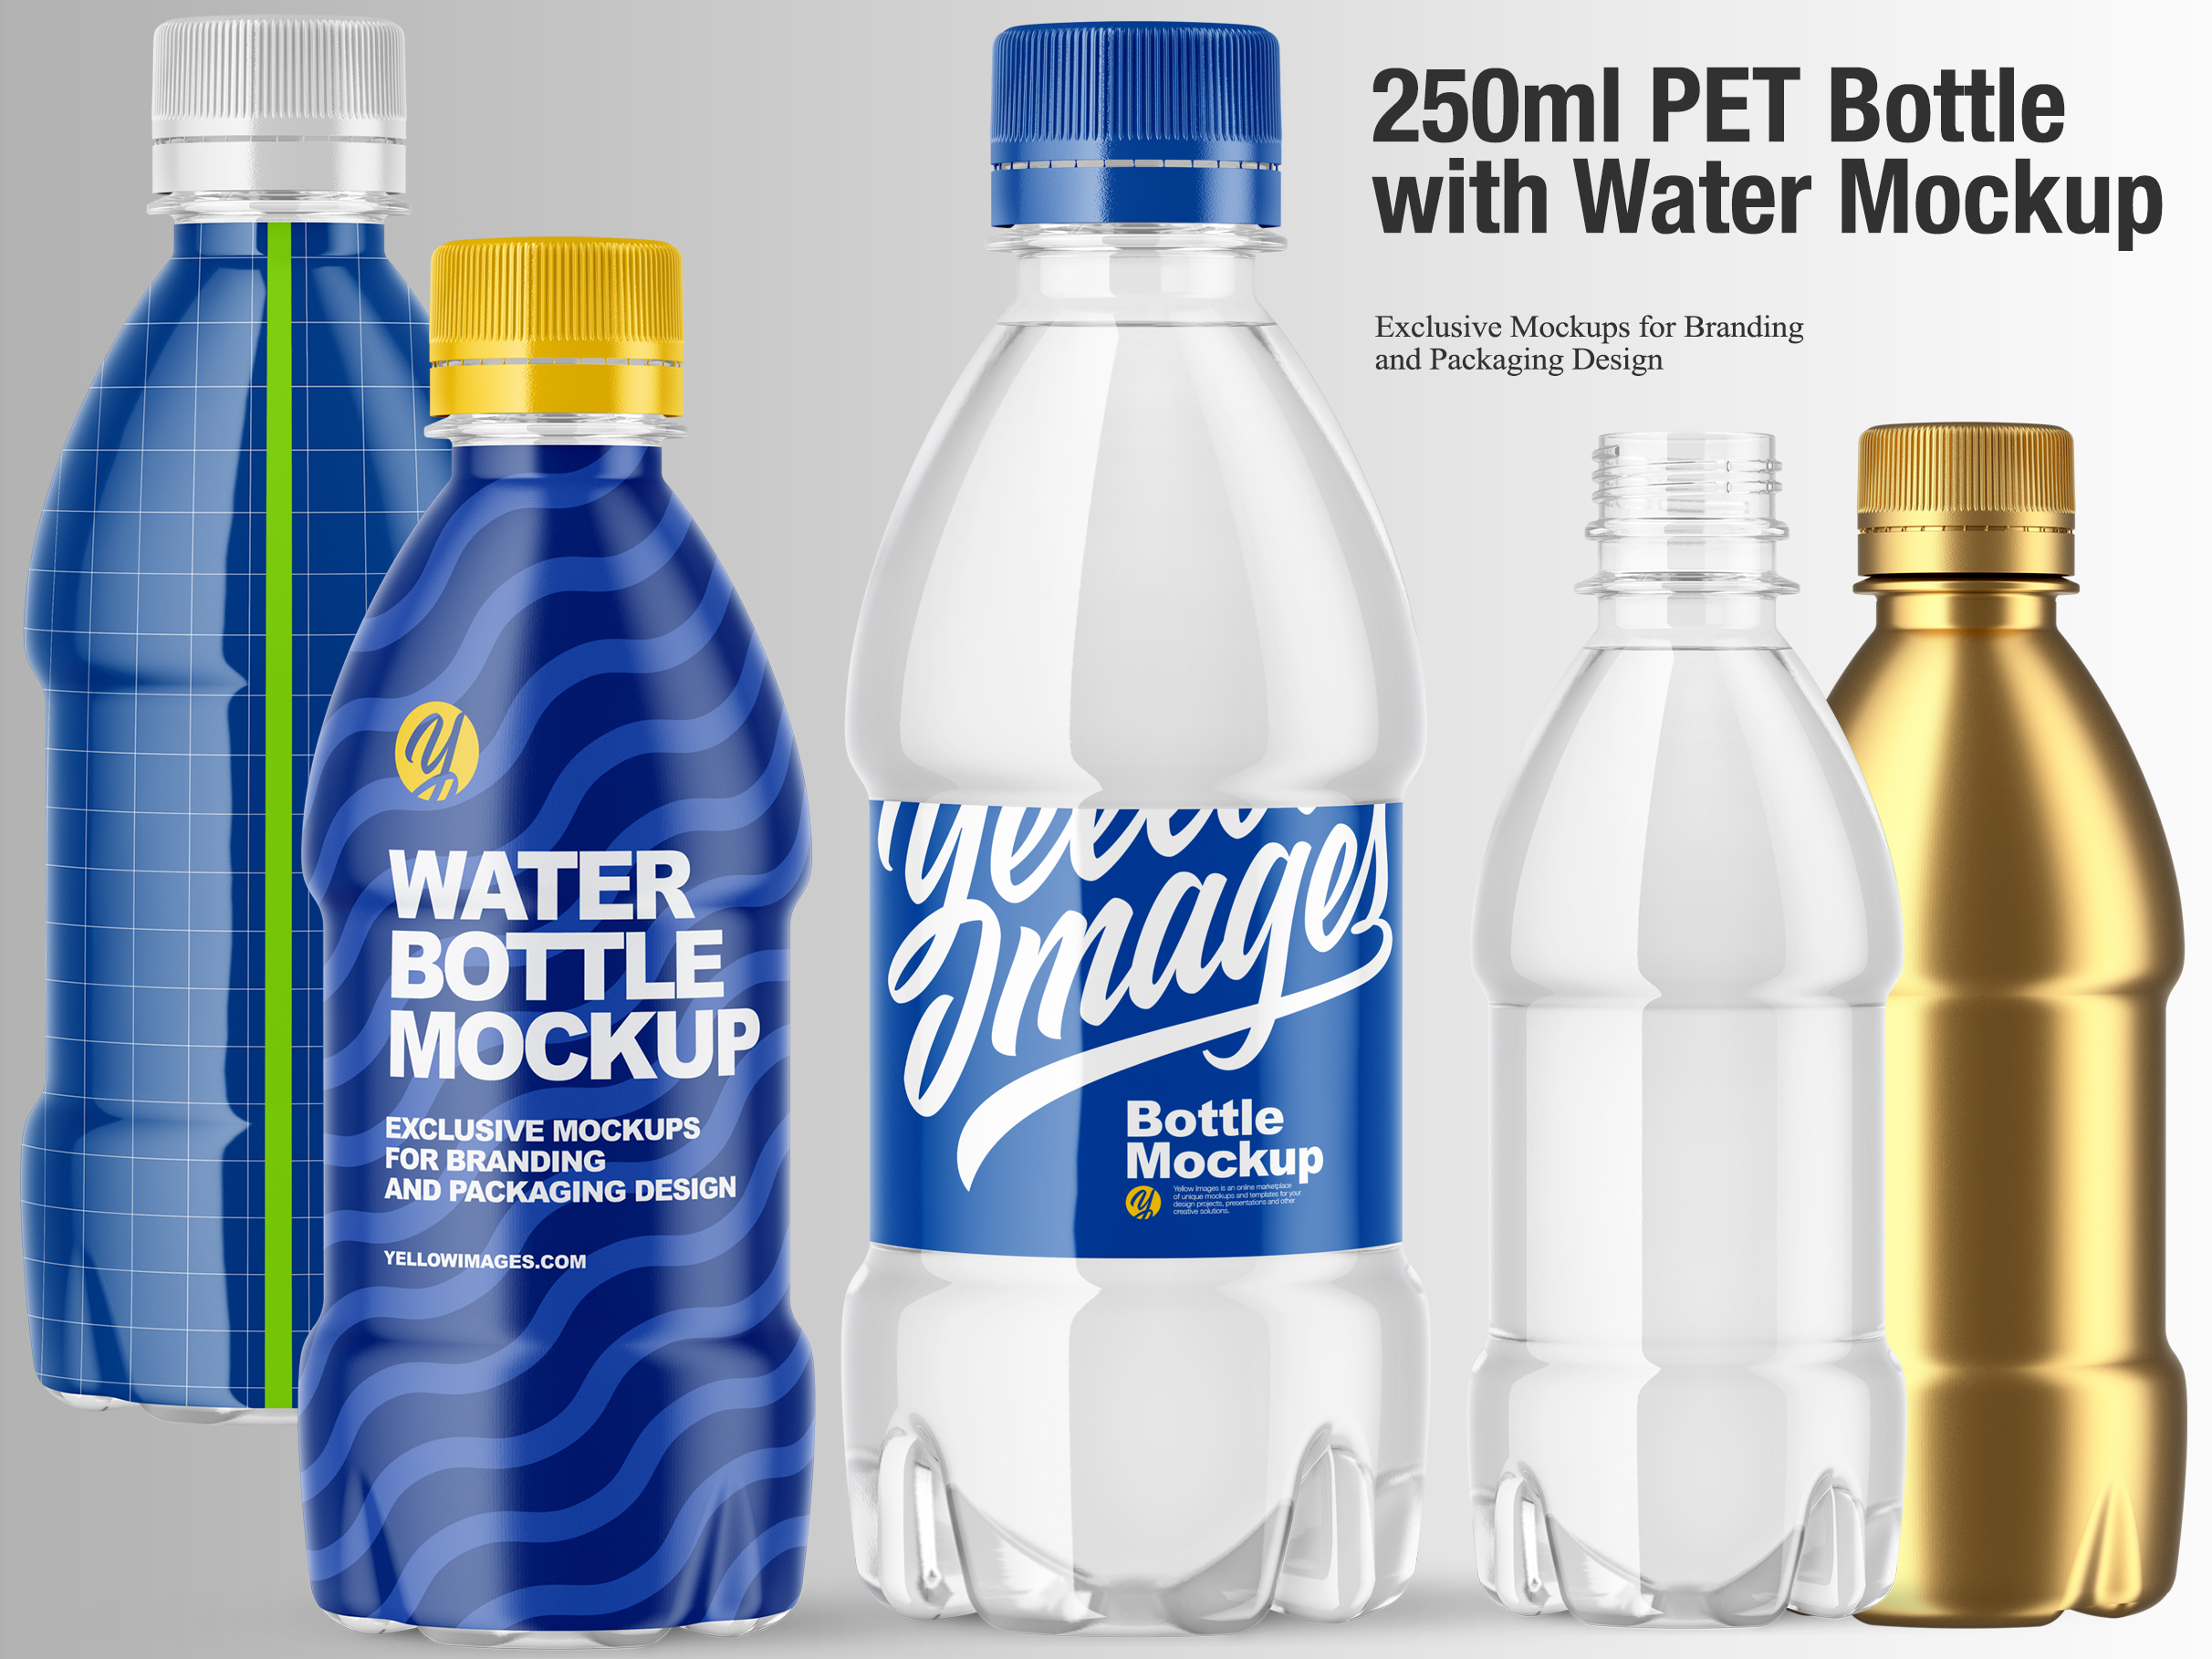 Sanitizer Bottle Mockup Free Download Download Free And Premium Psd Mockups